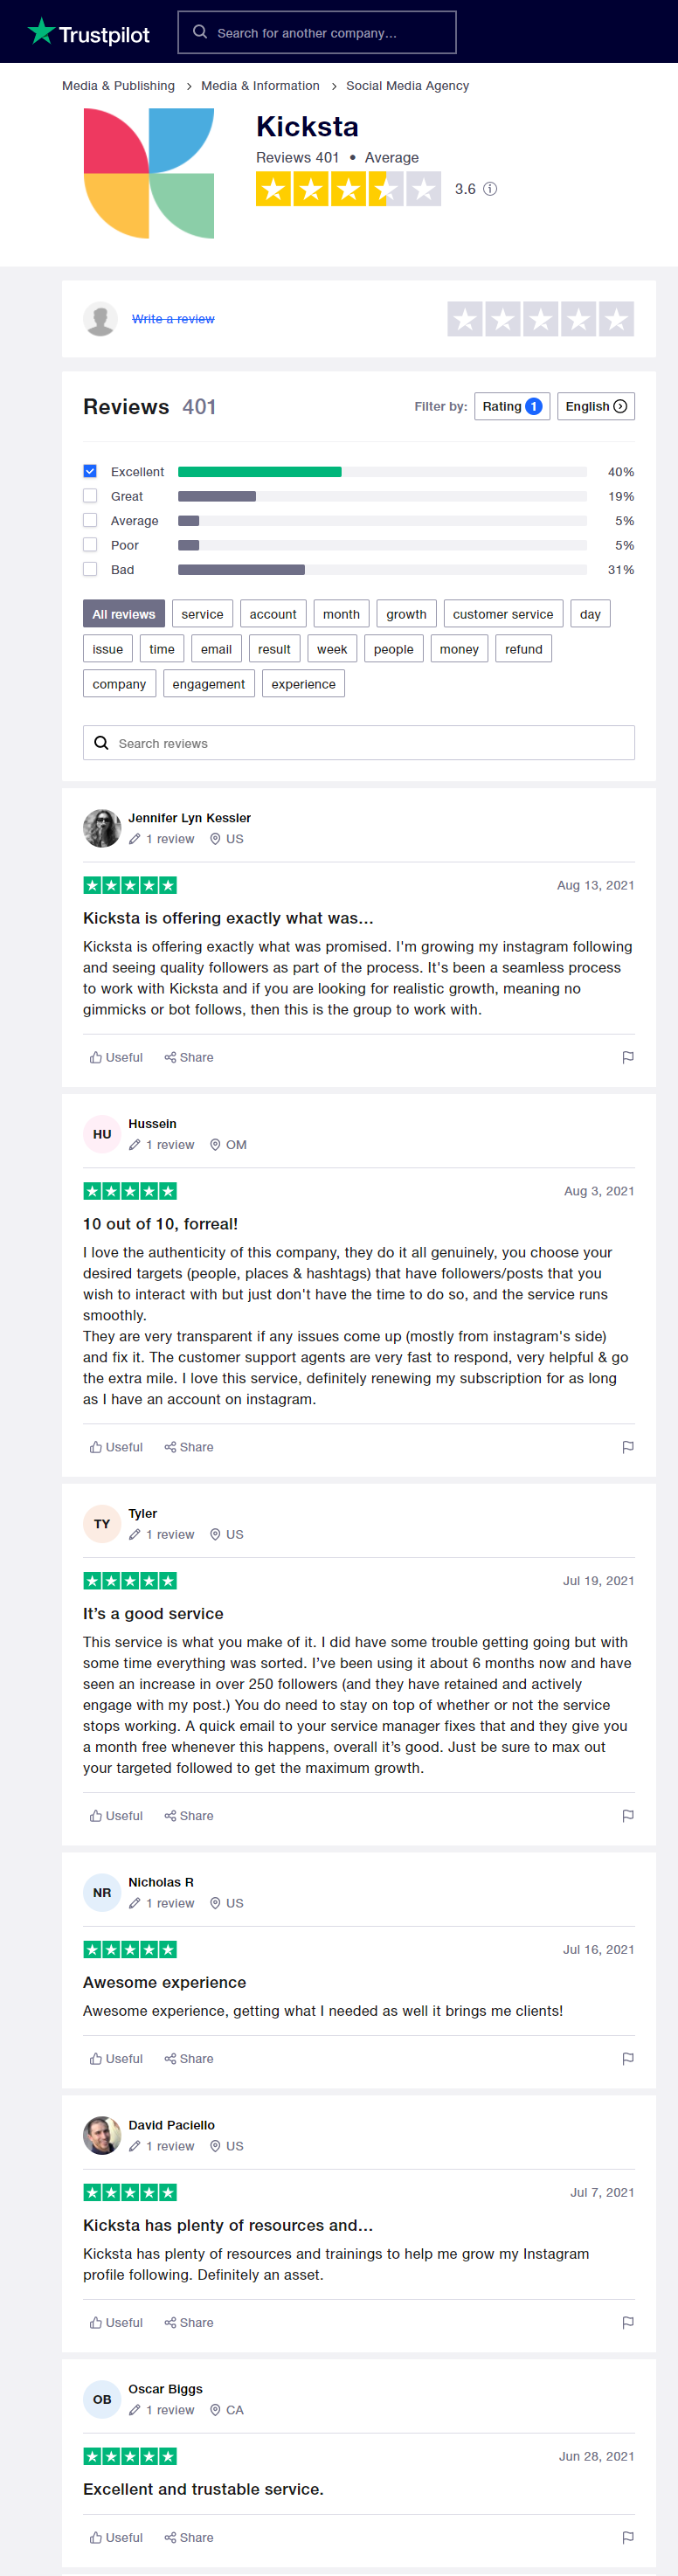 Kicksta reviews from Trustpilot